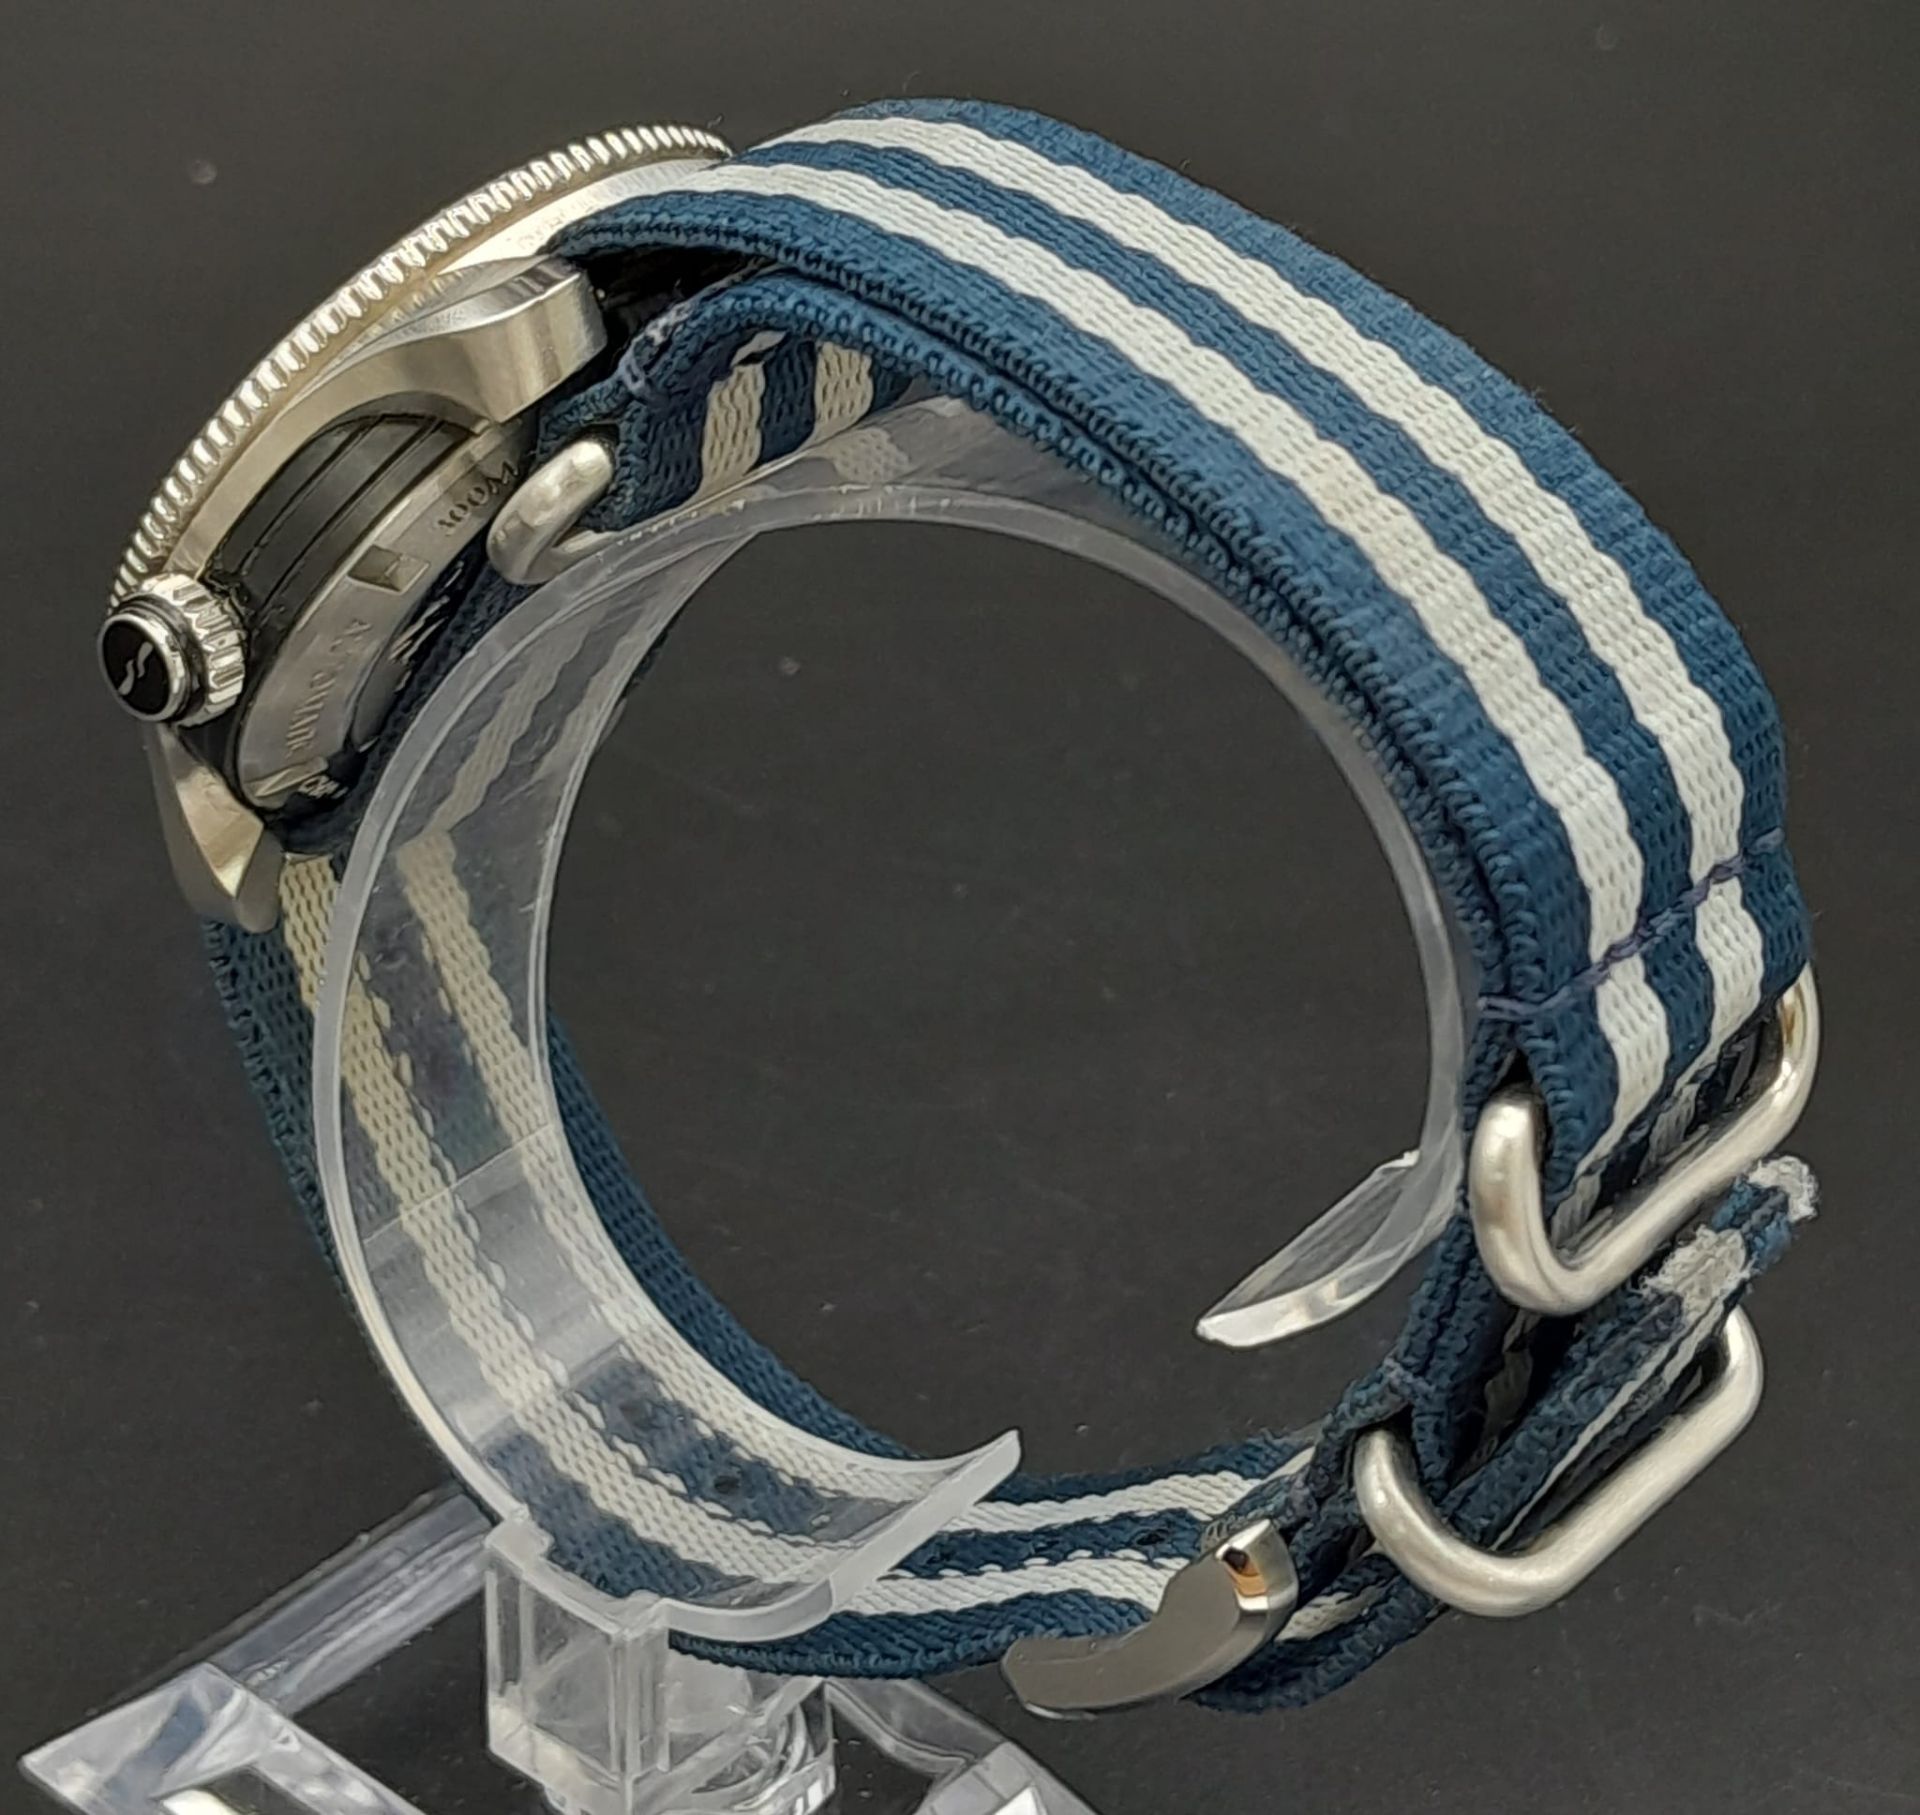 A Bremont Supermarine Karakoram Gents Watch. Striped textile Bremont strap. Stainless steel case - - Image 4 of 17